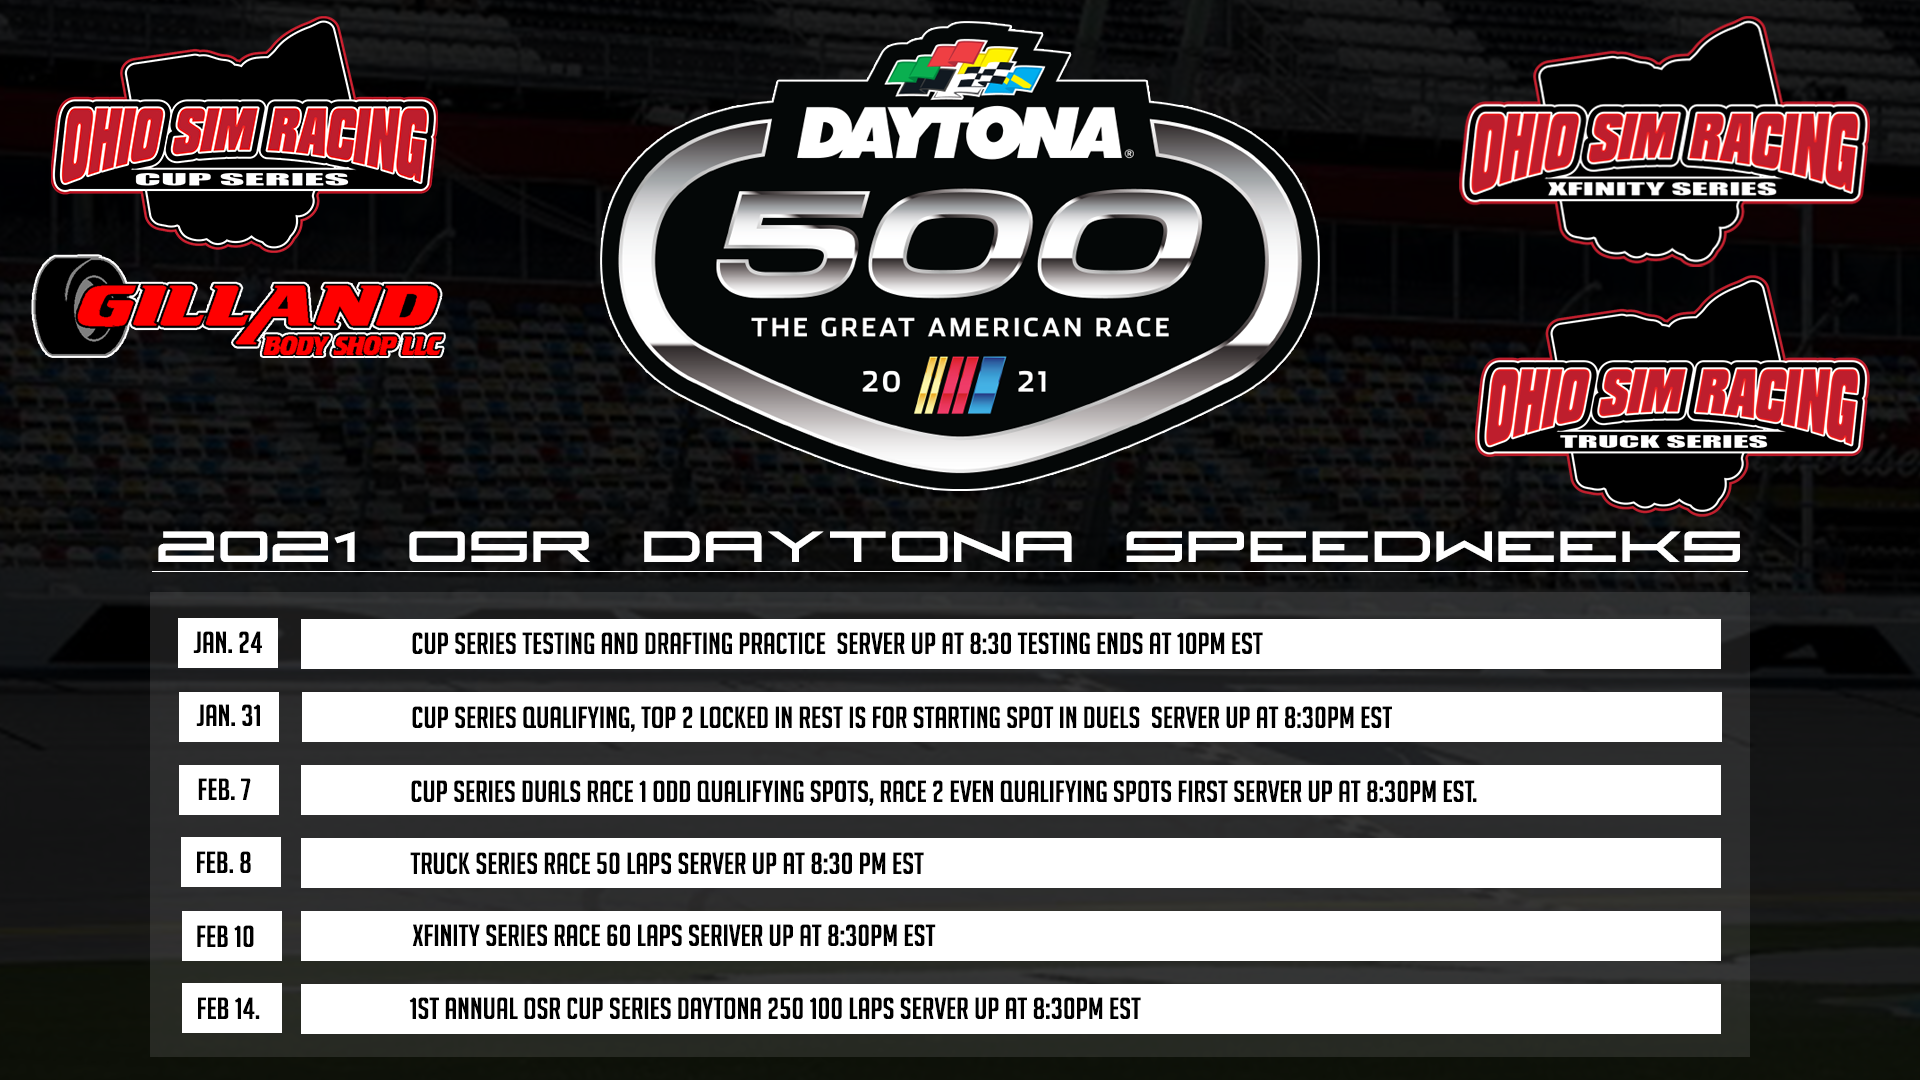 Ohio Sim Racing Daytona Speedweeks Schedule Released! Ohio Sim Racing